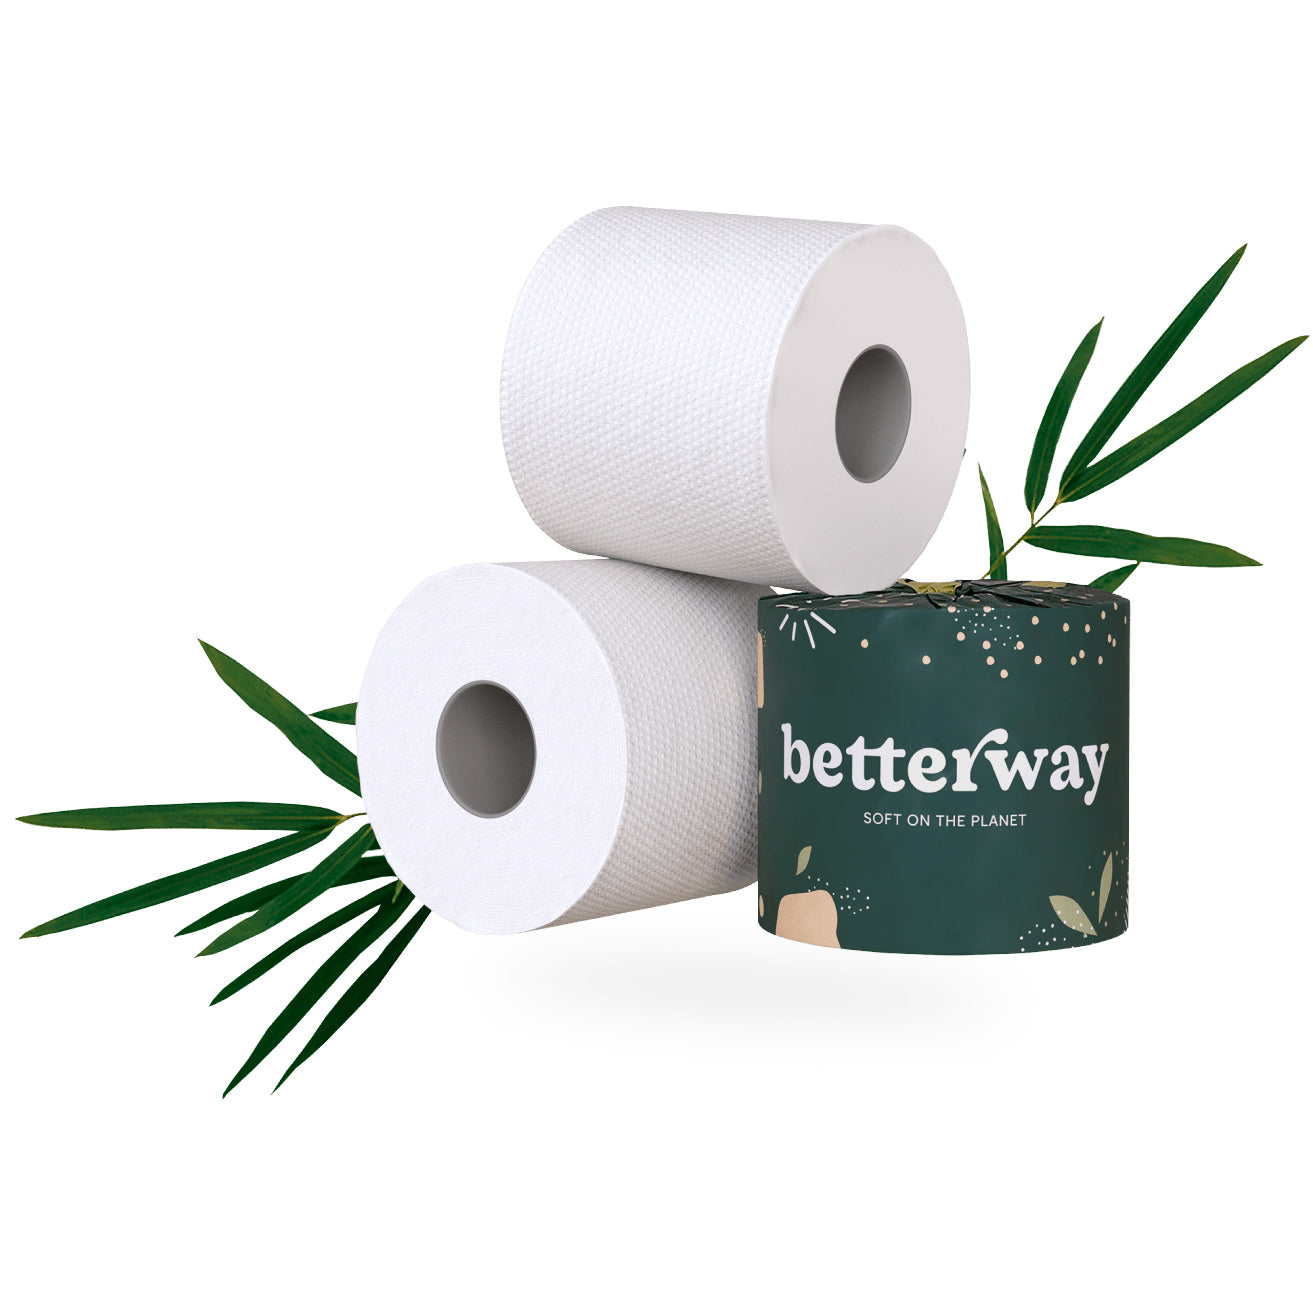 Bamboo Toilet Paper - 6 Rolls